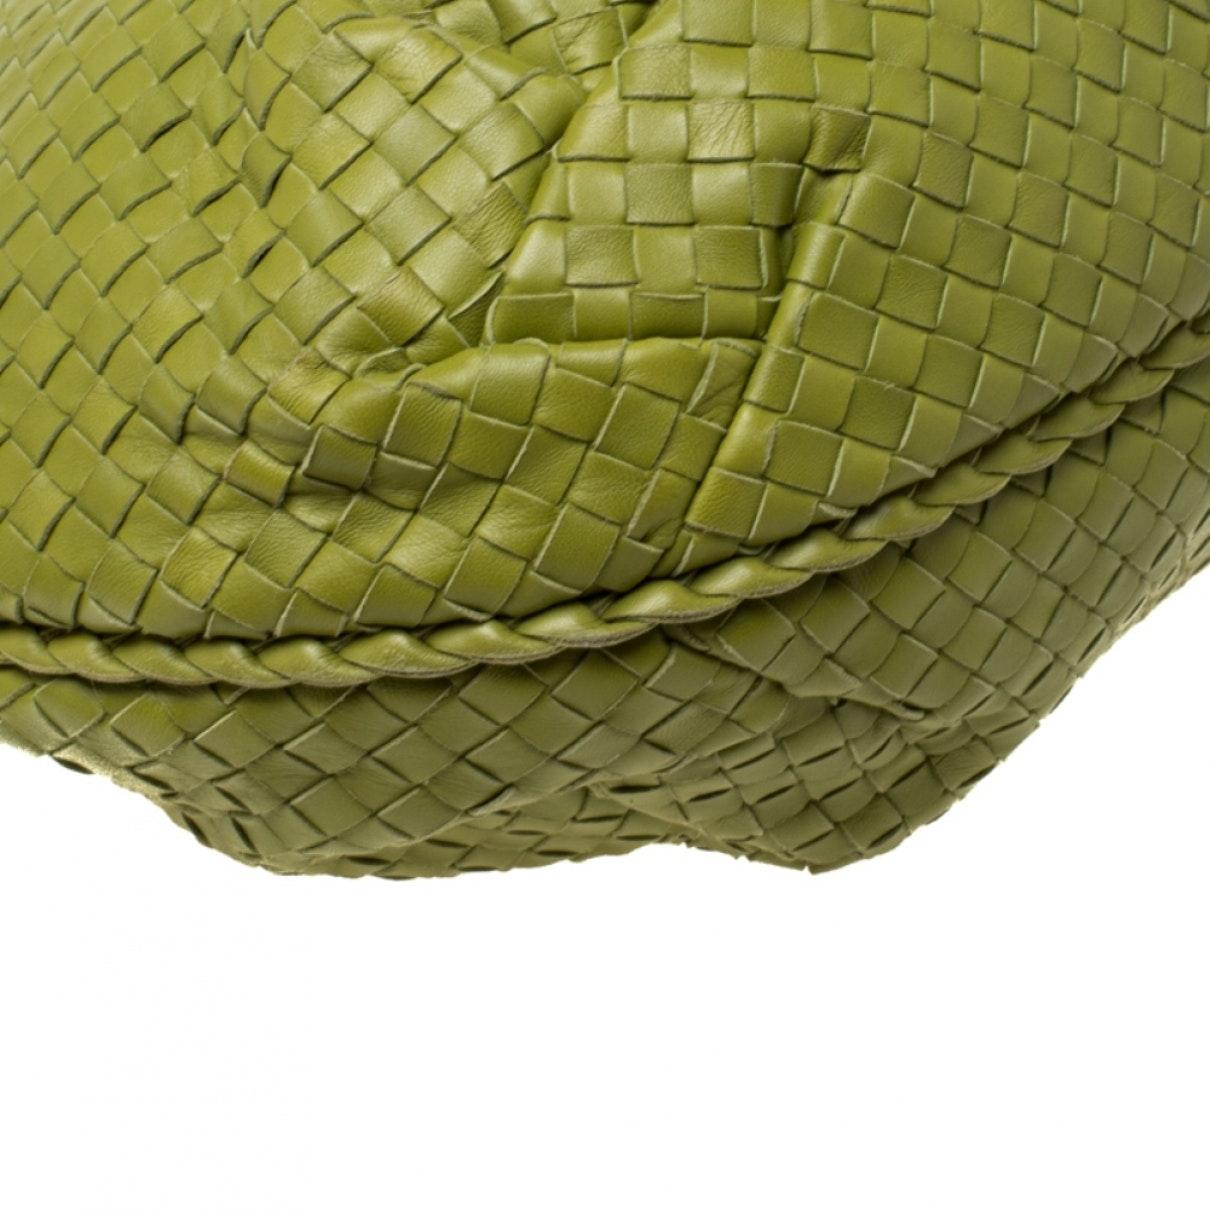 Bottega Veneta Veneta Leather Handbag in Green - Lyst